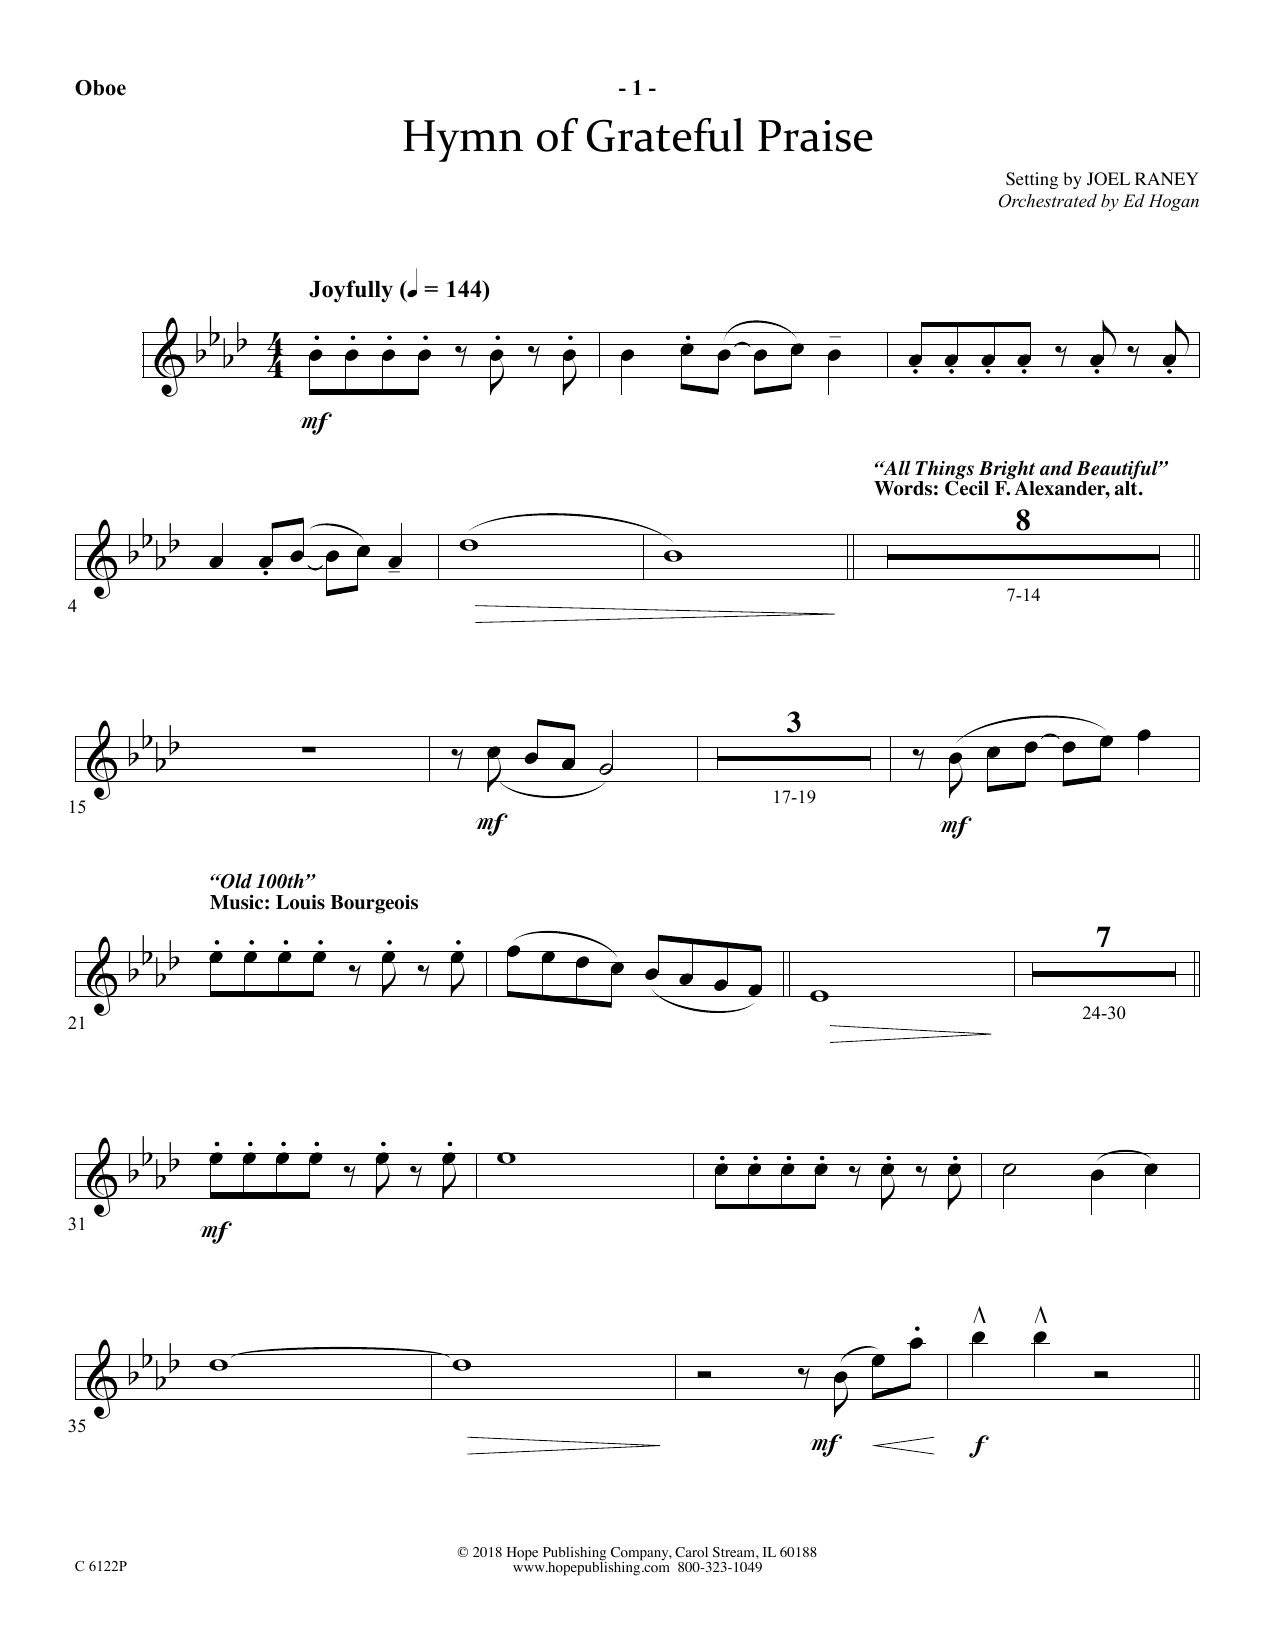 Download Joel Raney Hymn Of Grateful Praise - Oboe Sheet Music